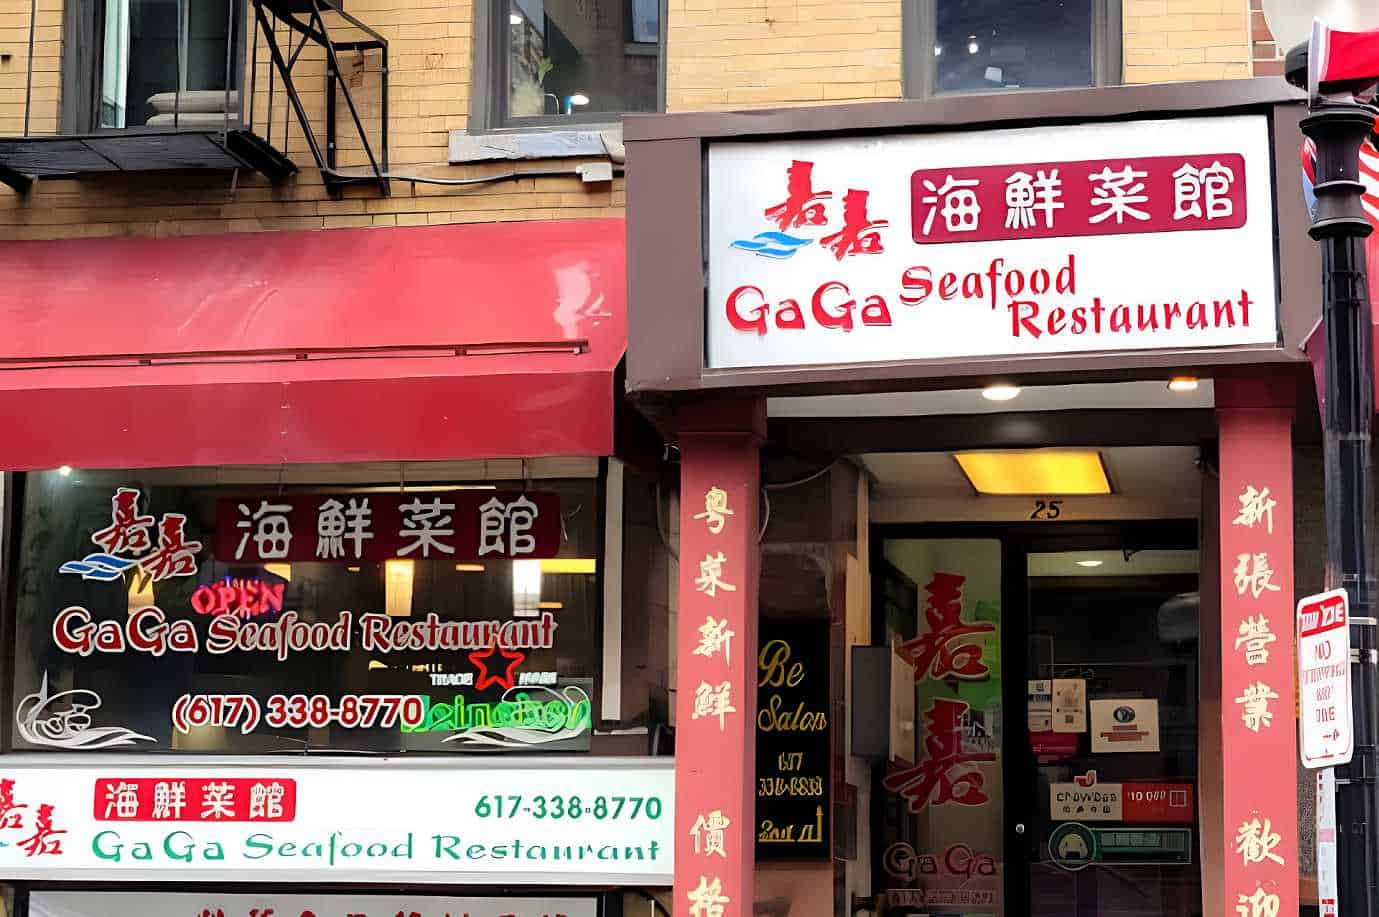 Gaga Seafood Restaurant Best Chinese Restaurants in Boston, MA